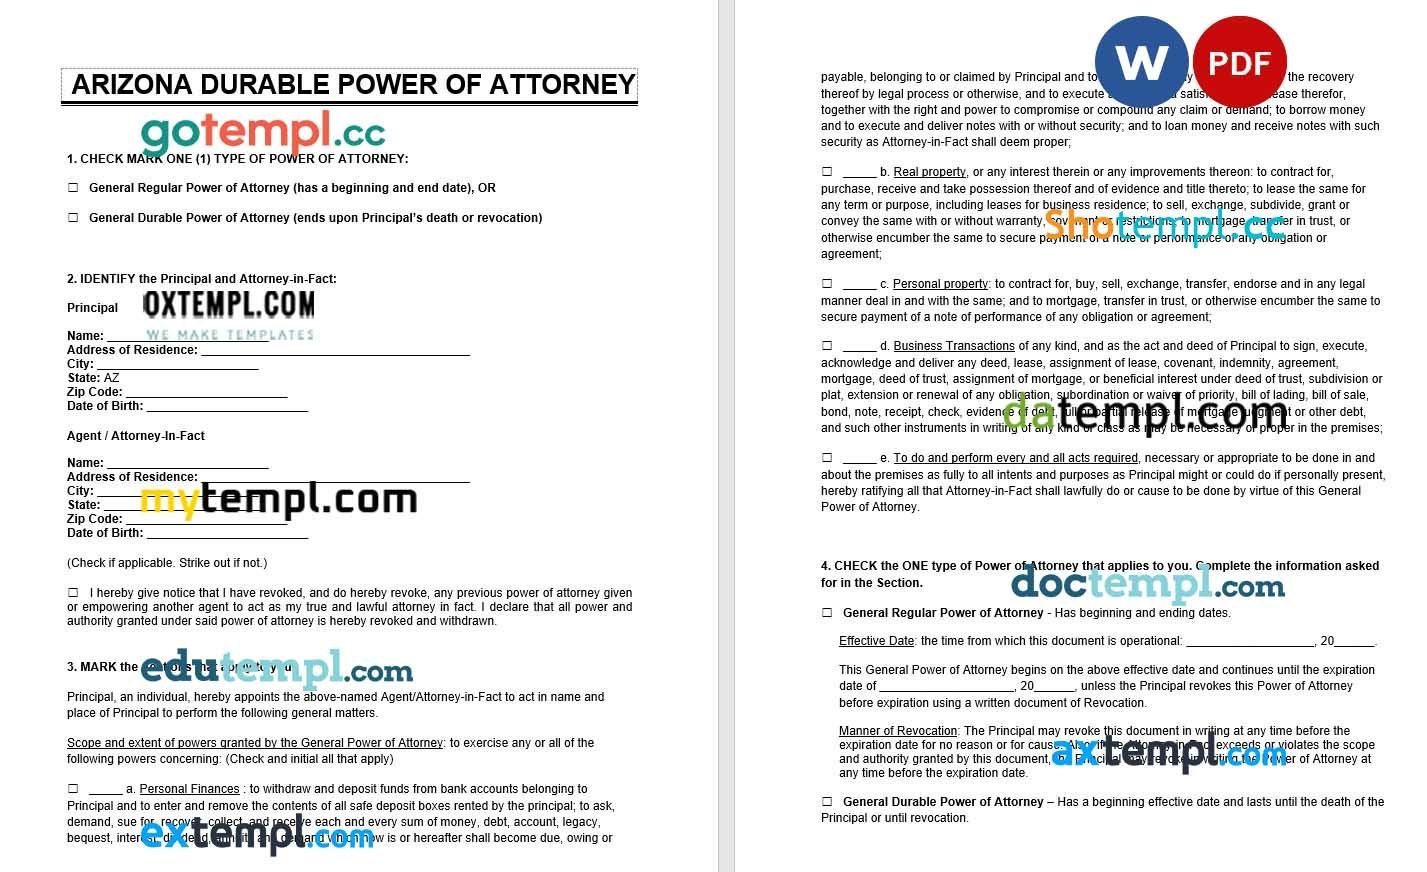 Arizona Durable Power of Attorney example, fully editable